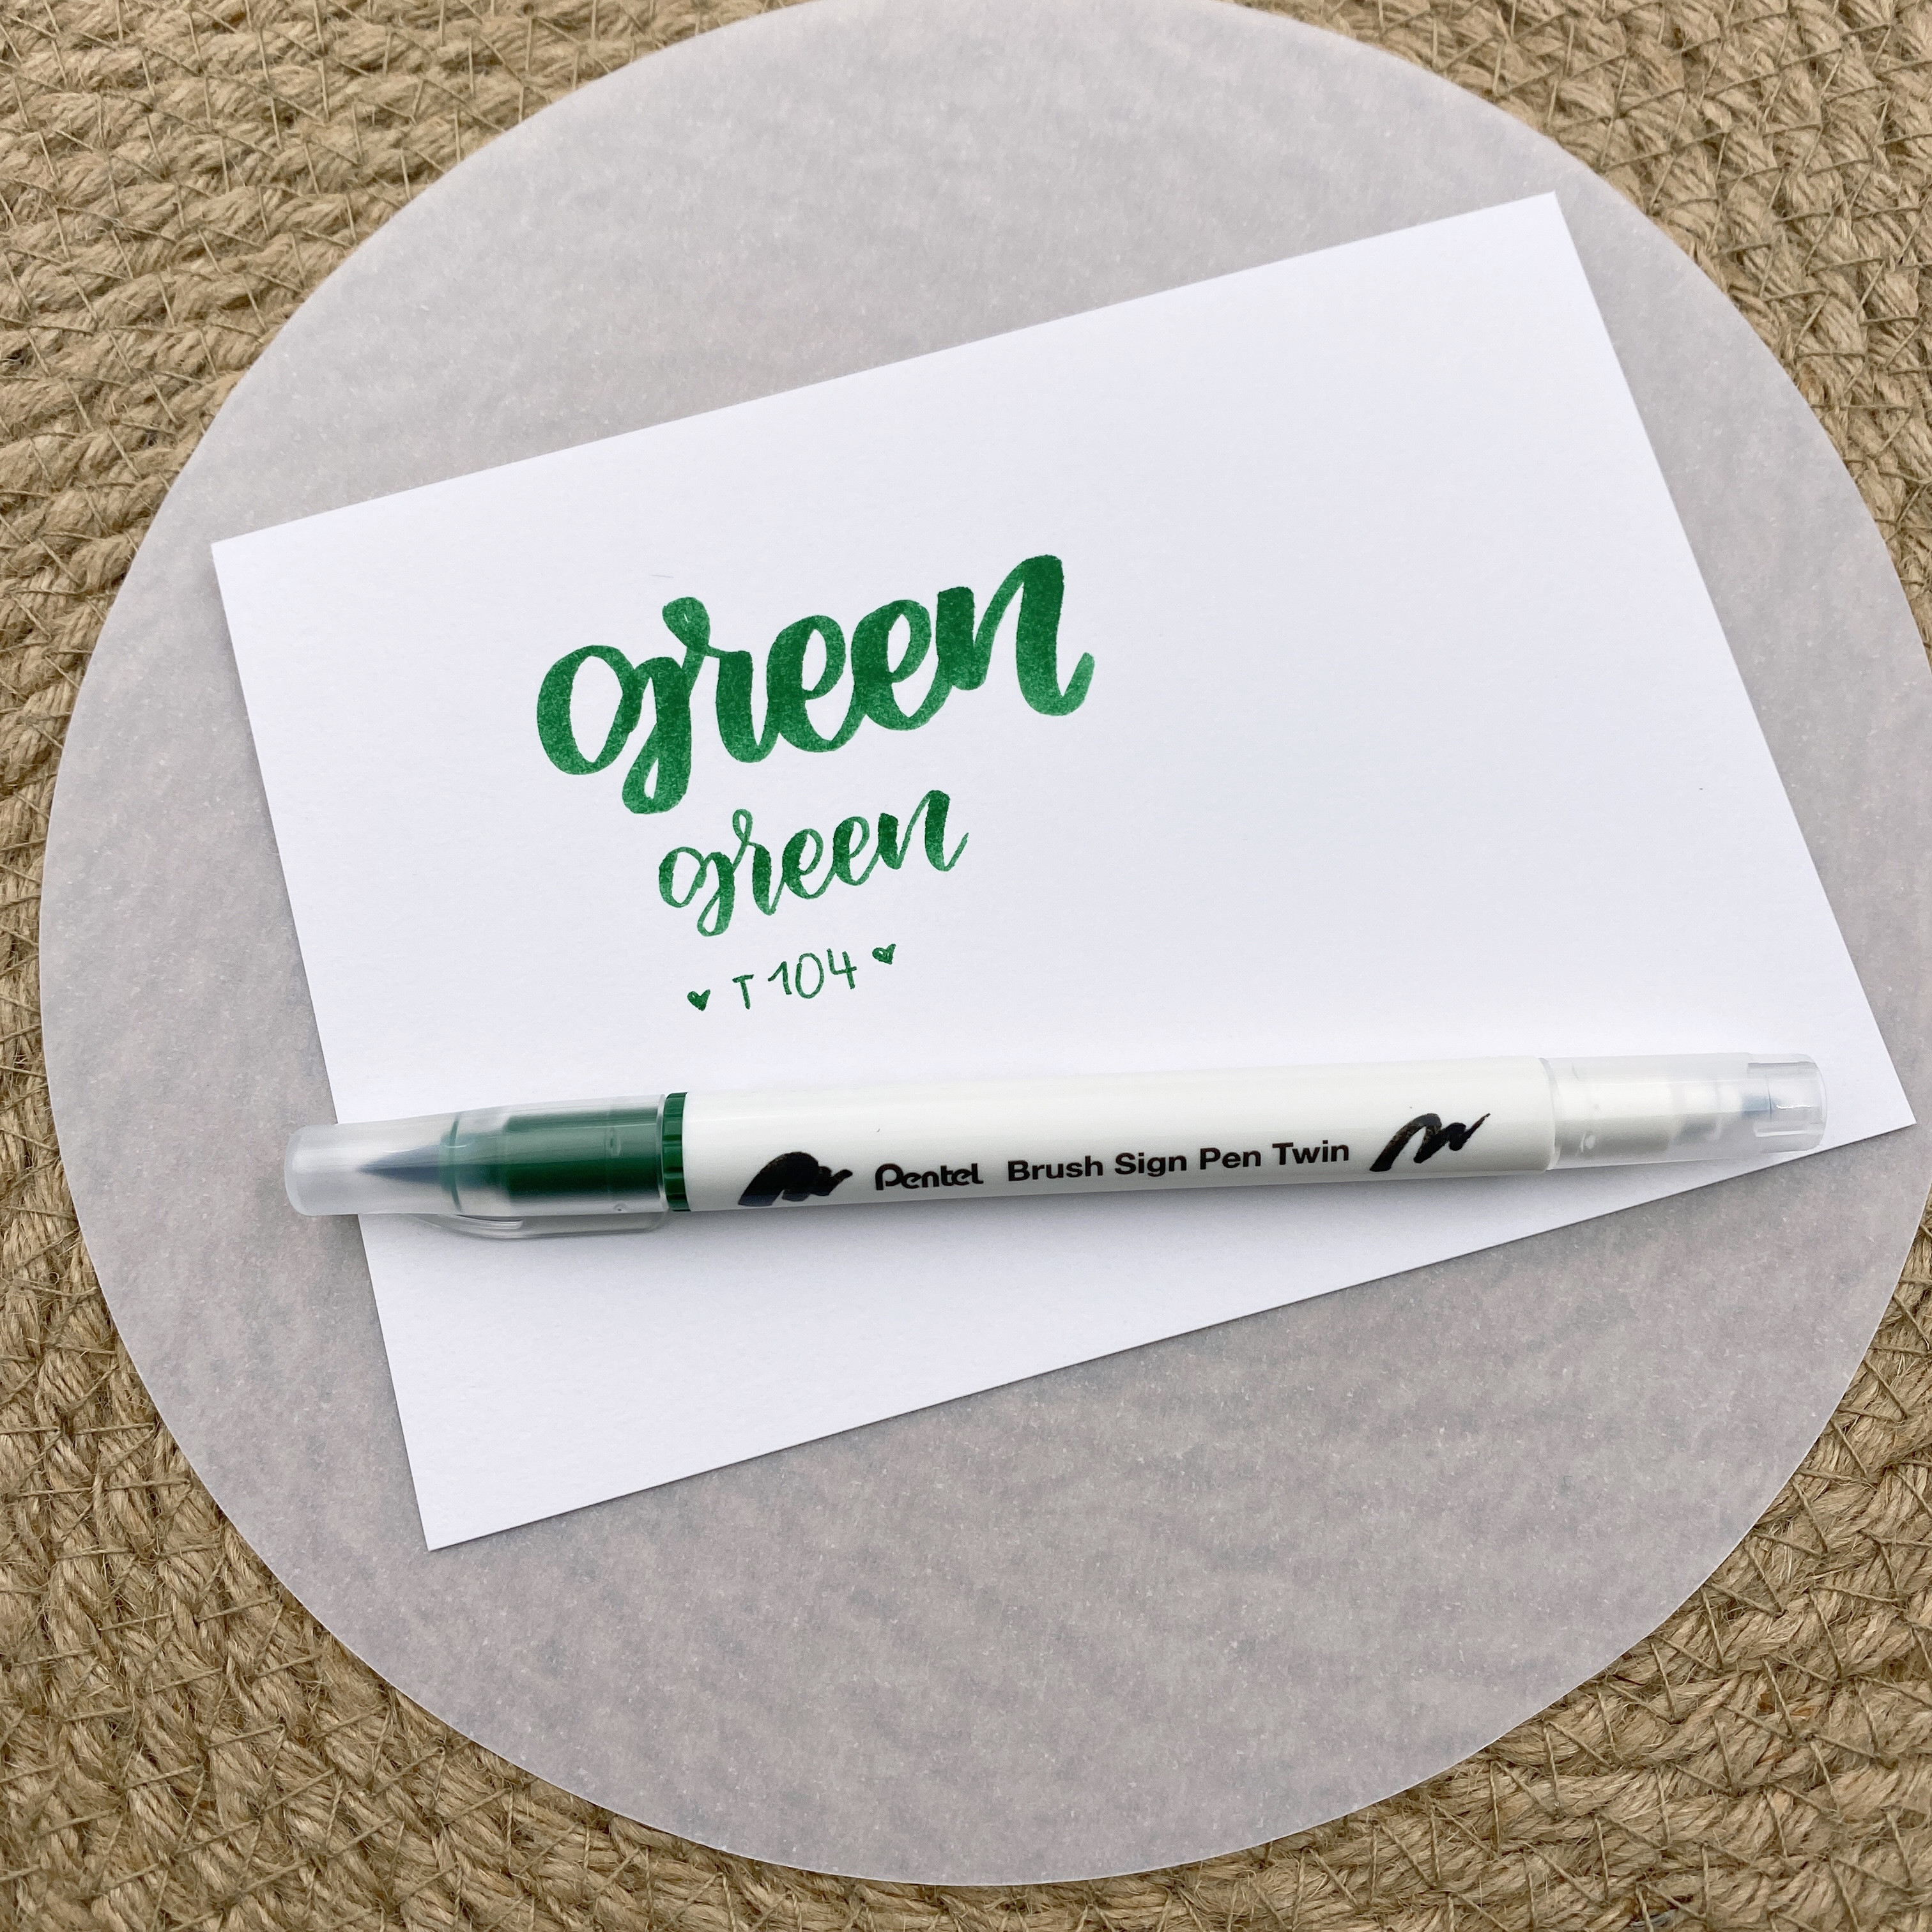 Pentel Brush Sign Pen Twin 104 Green